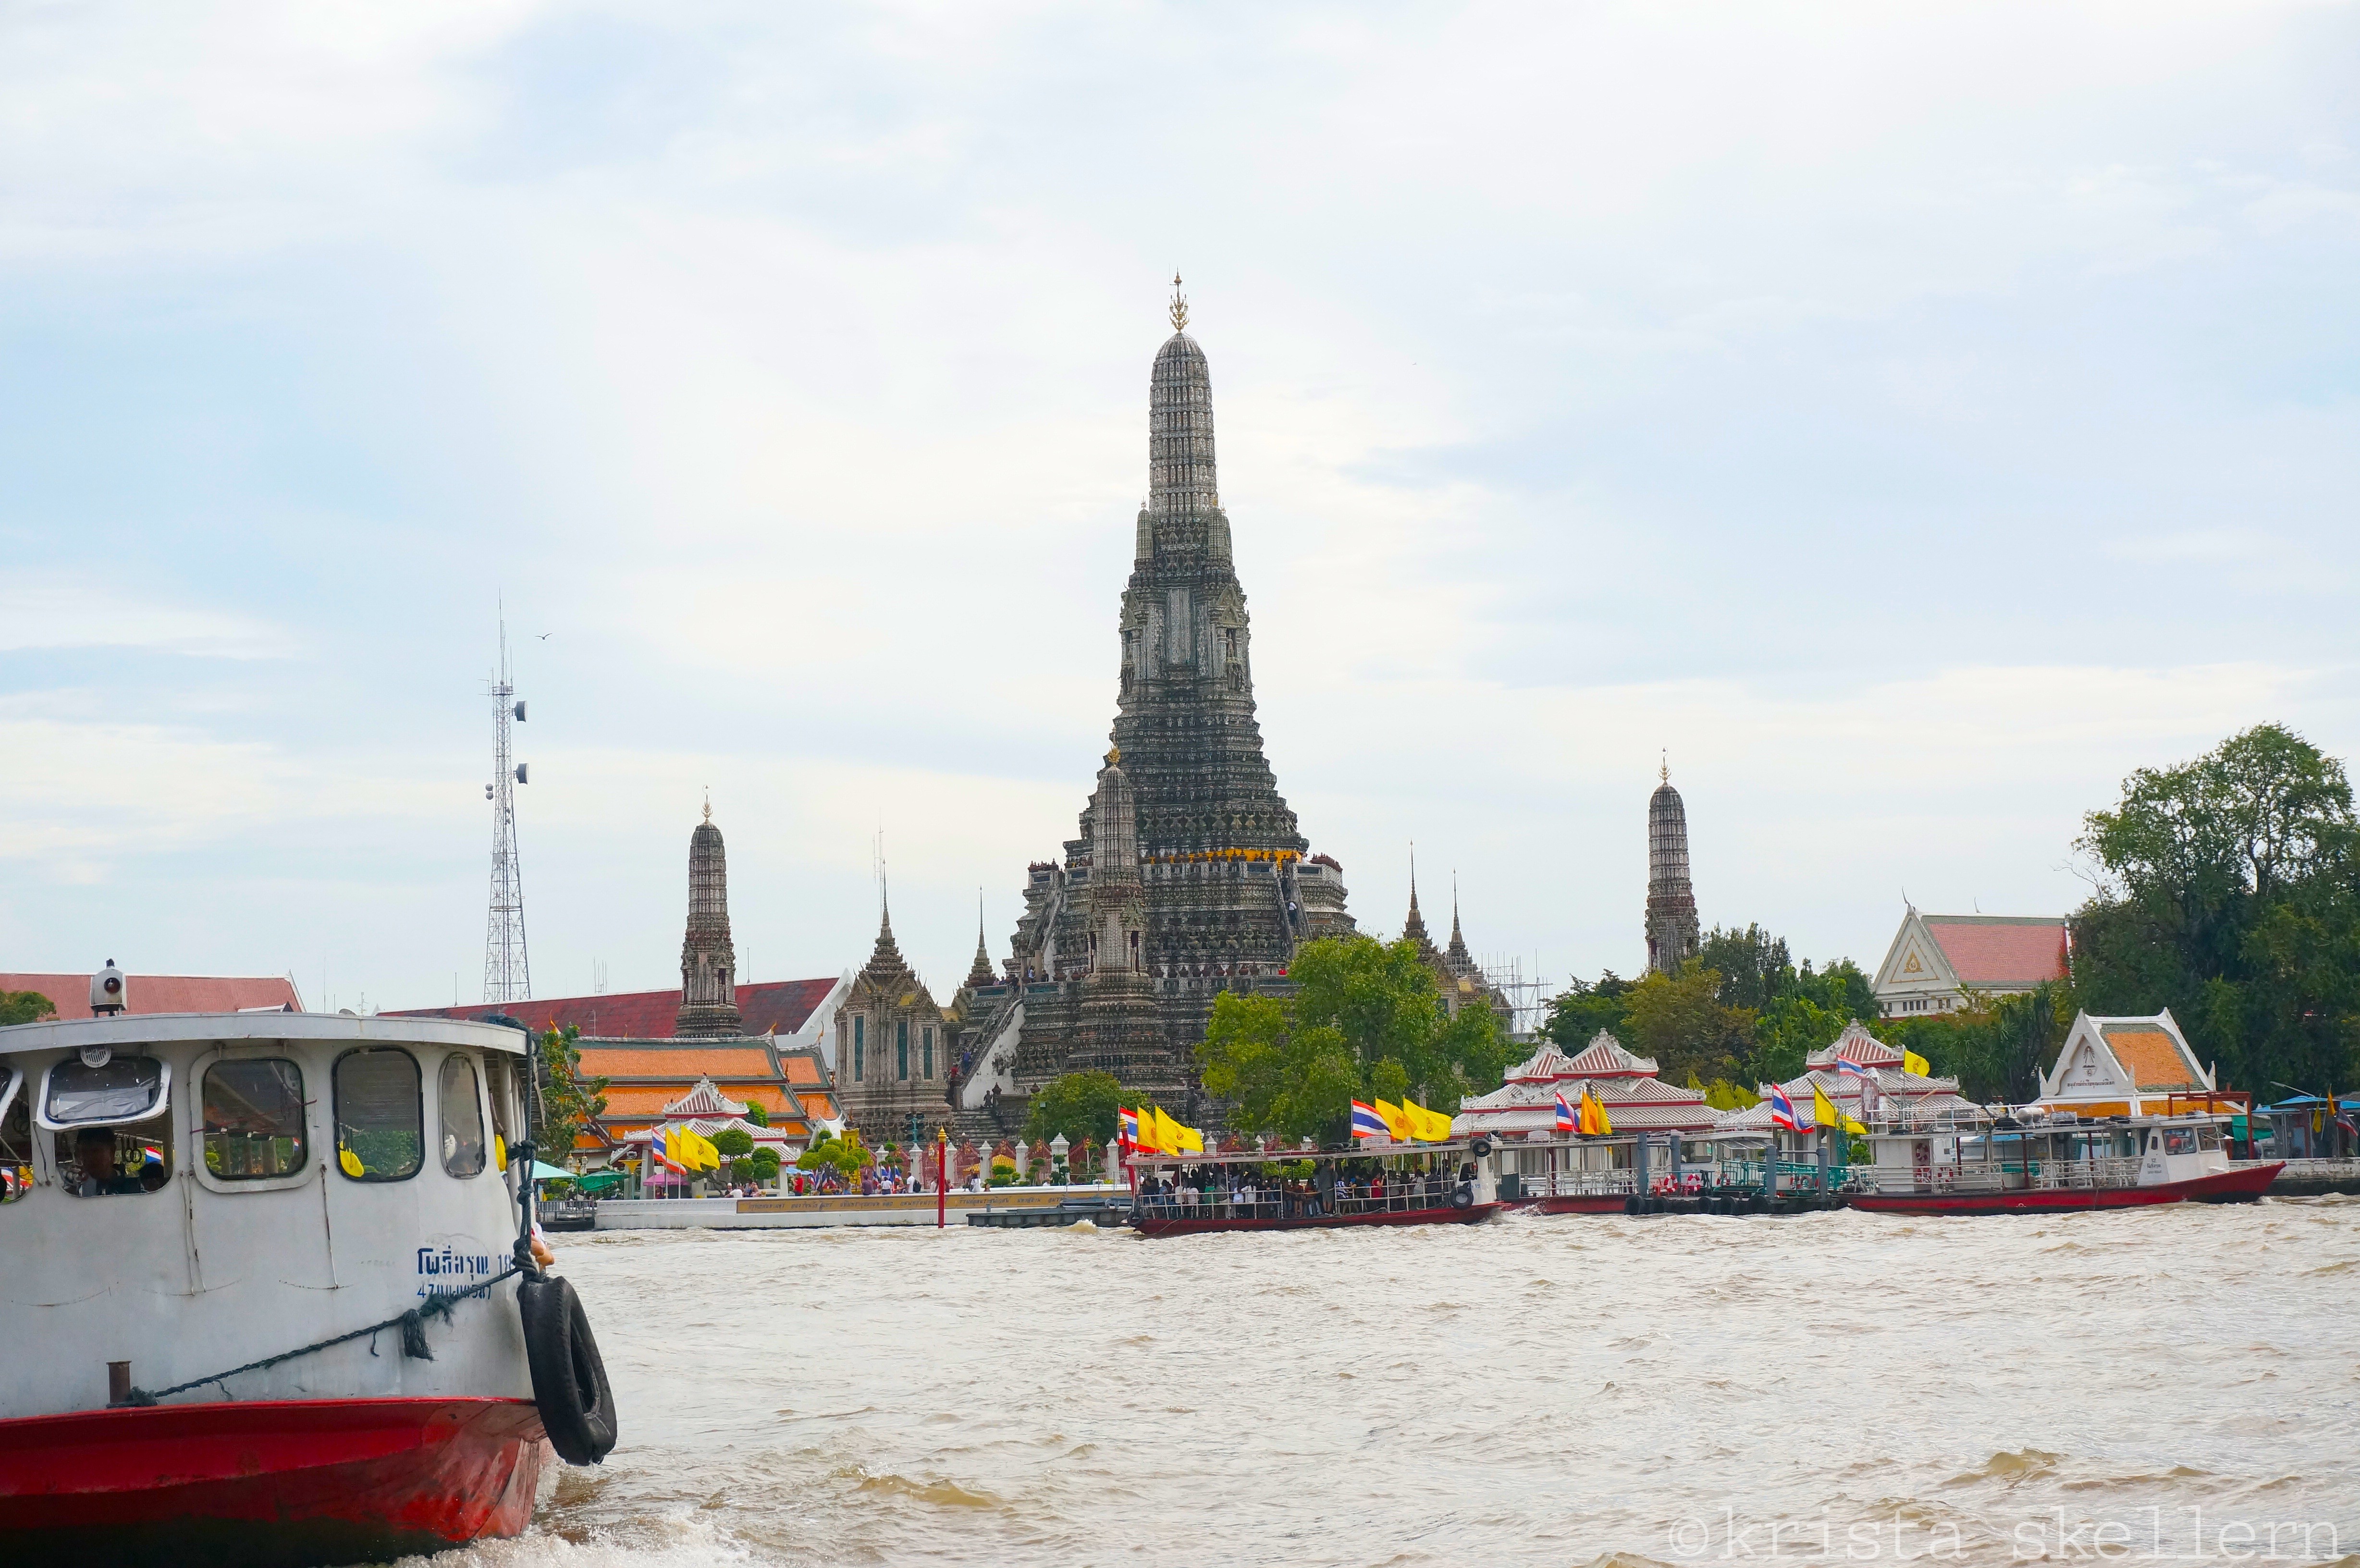 Wat Arun across the river